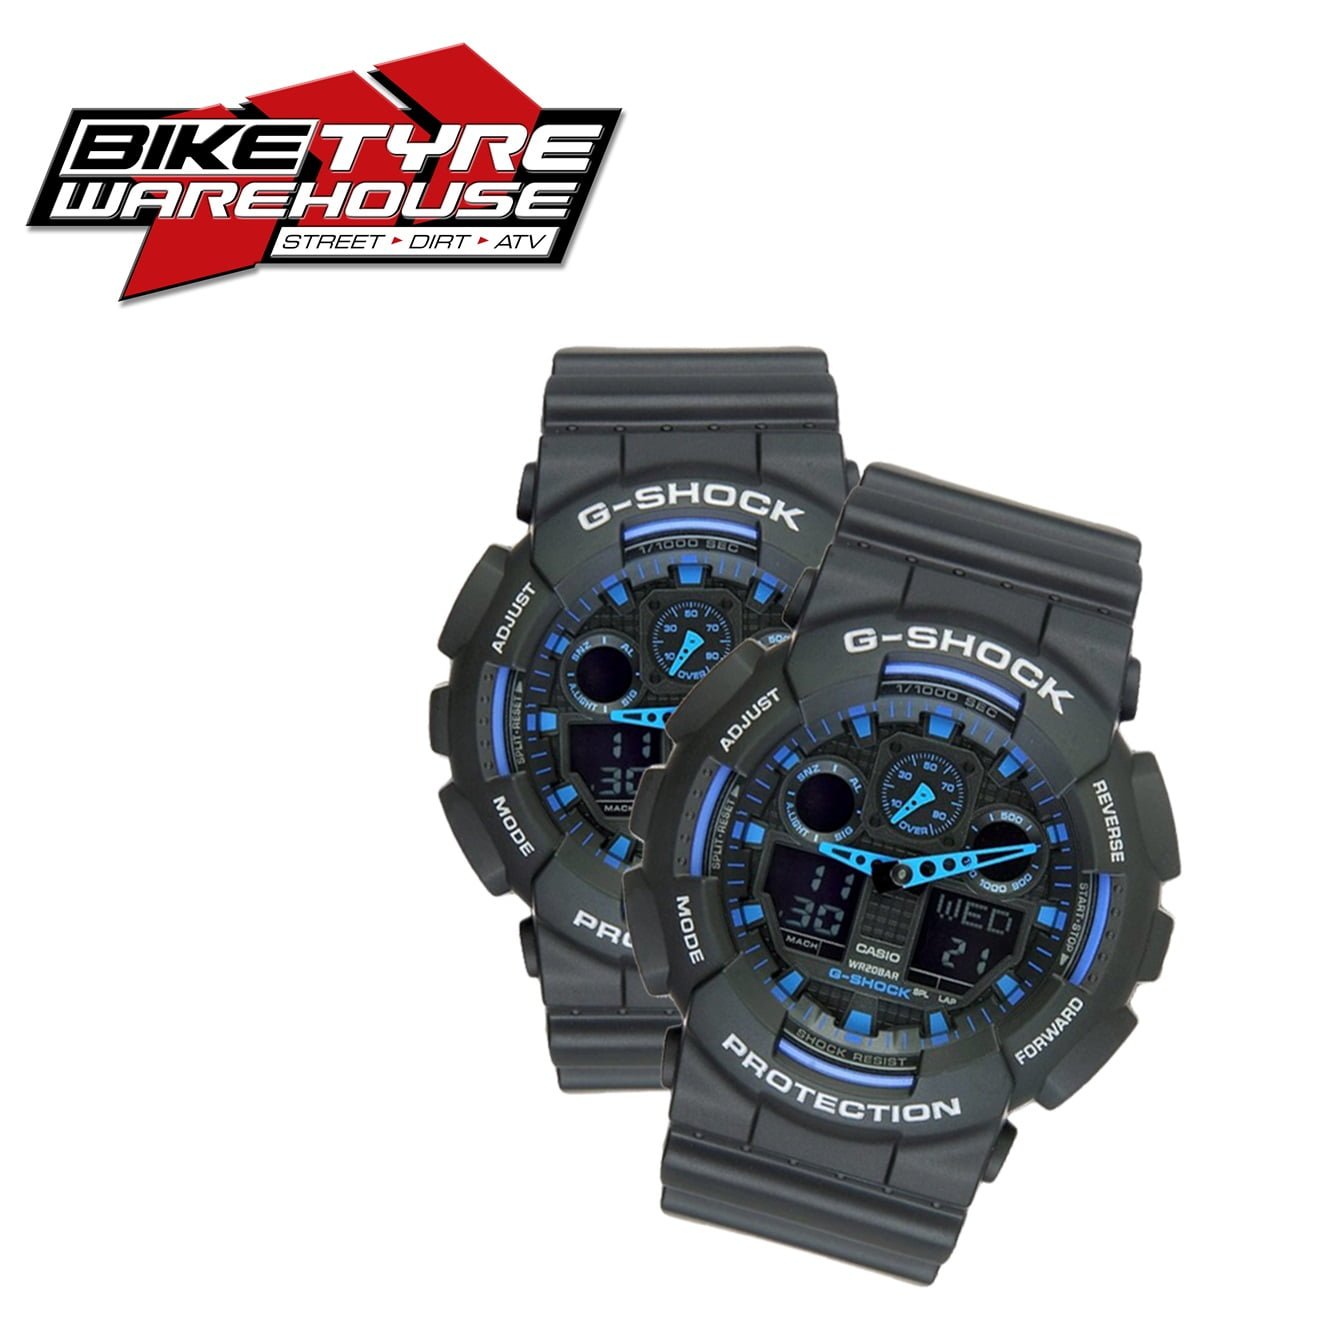 Bike Tyre Warehouse Prizes CasioG-Shock Watch